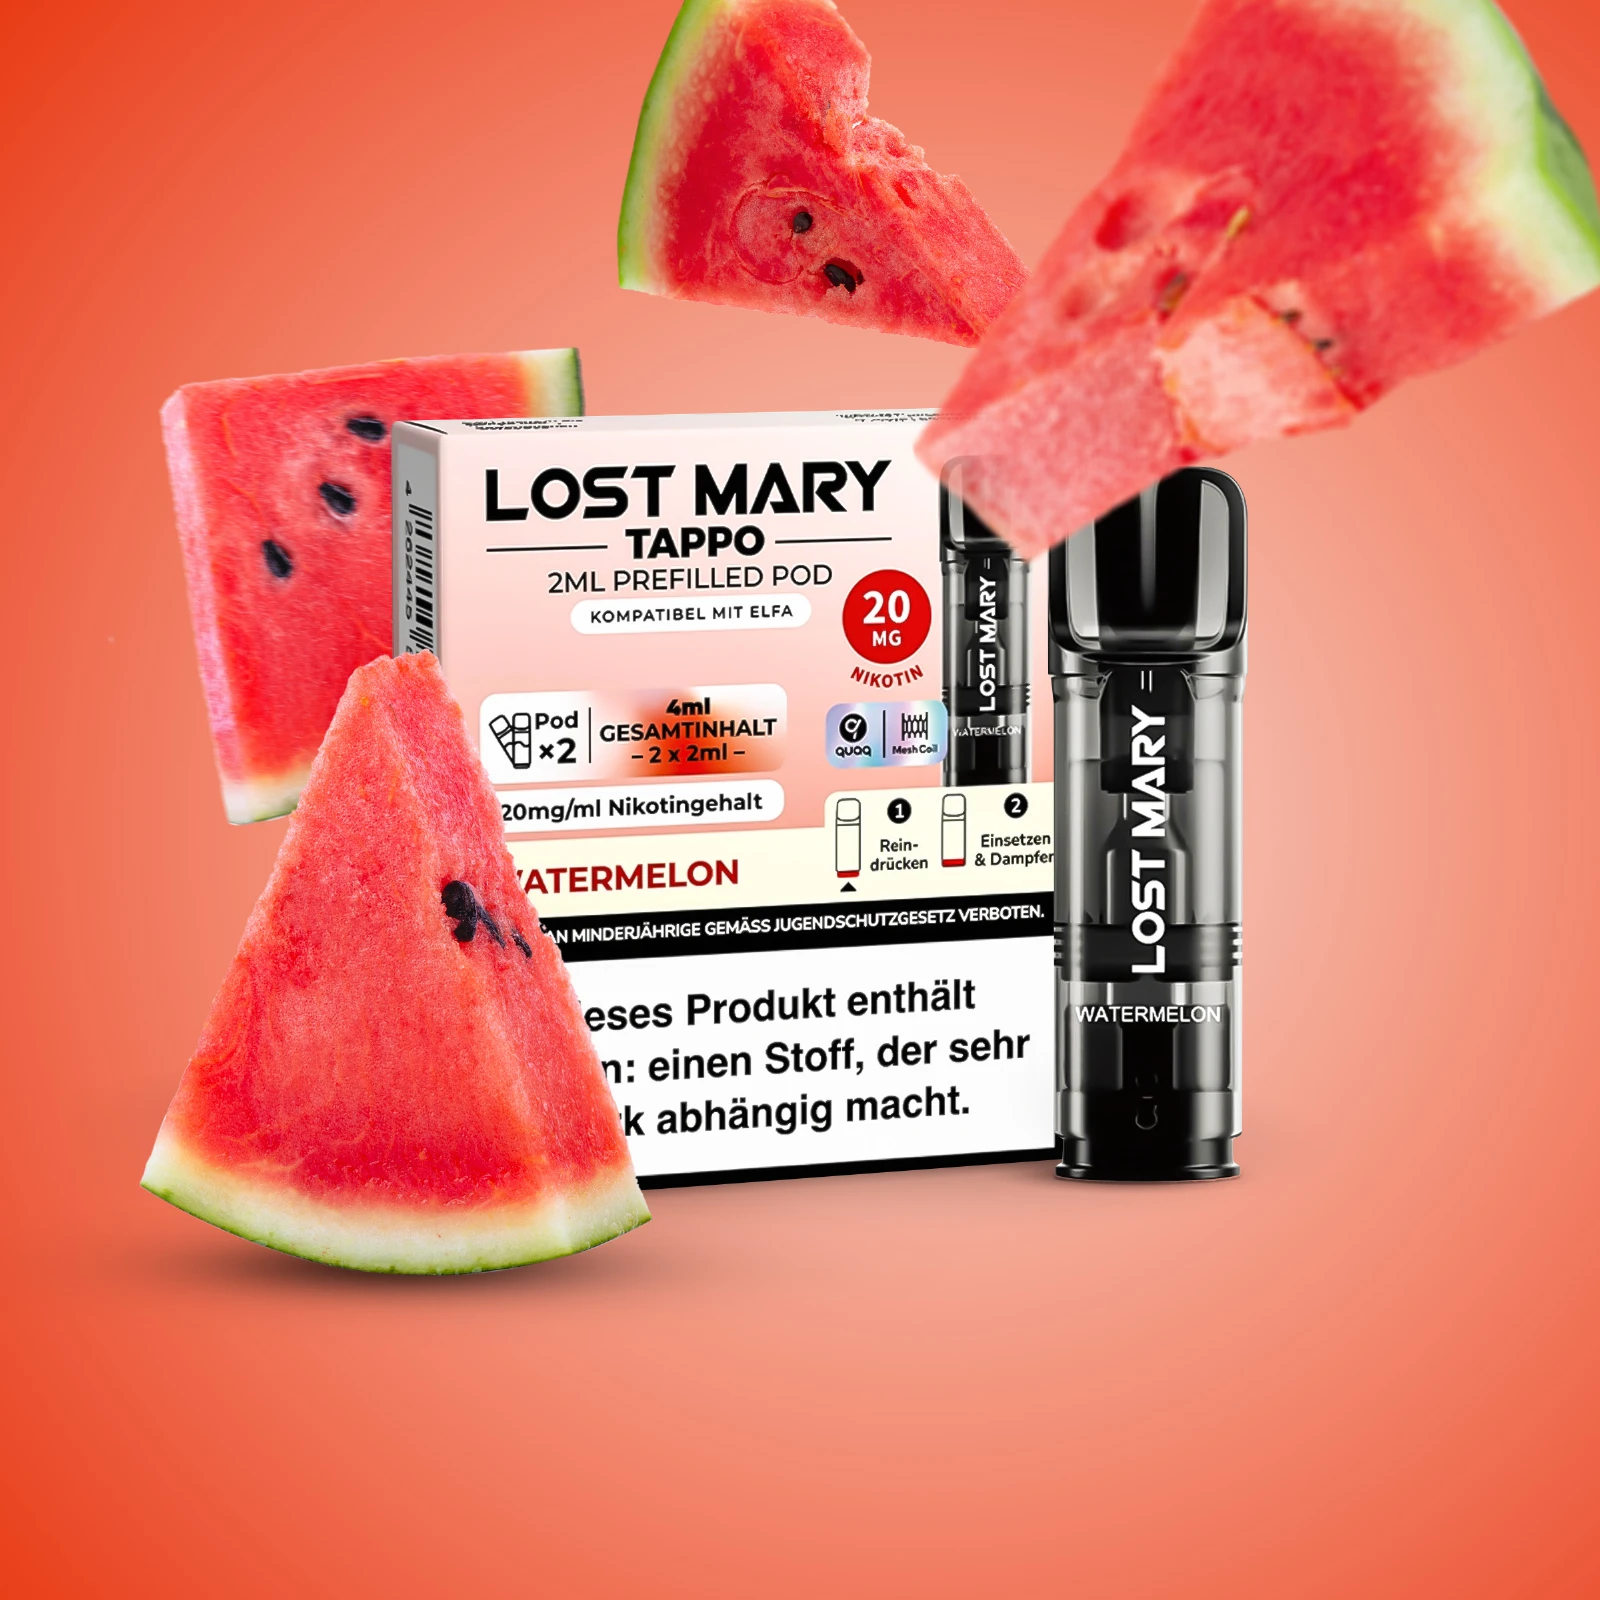 Lost Mary Tappo Watermelon: Umweltfreundliches Pod-System mit Prefilled Pods